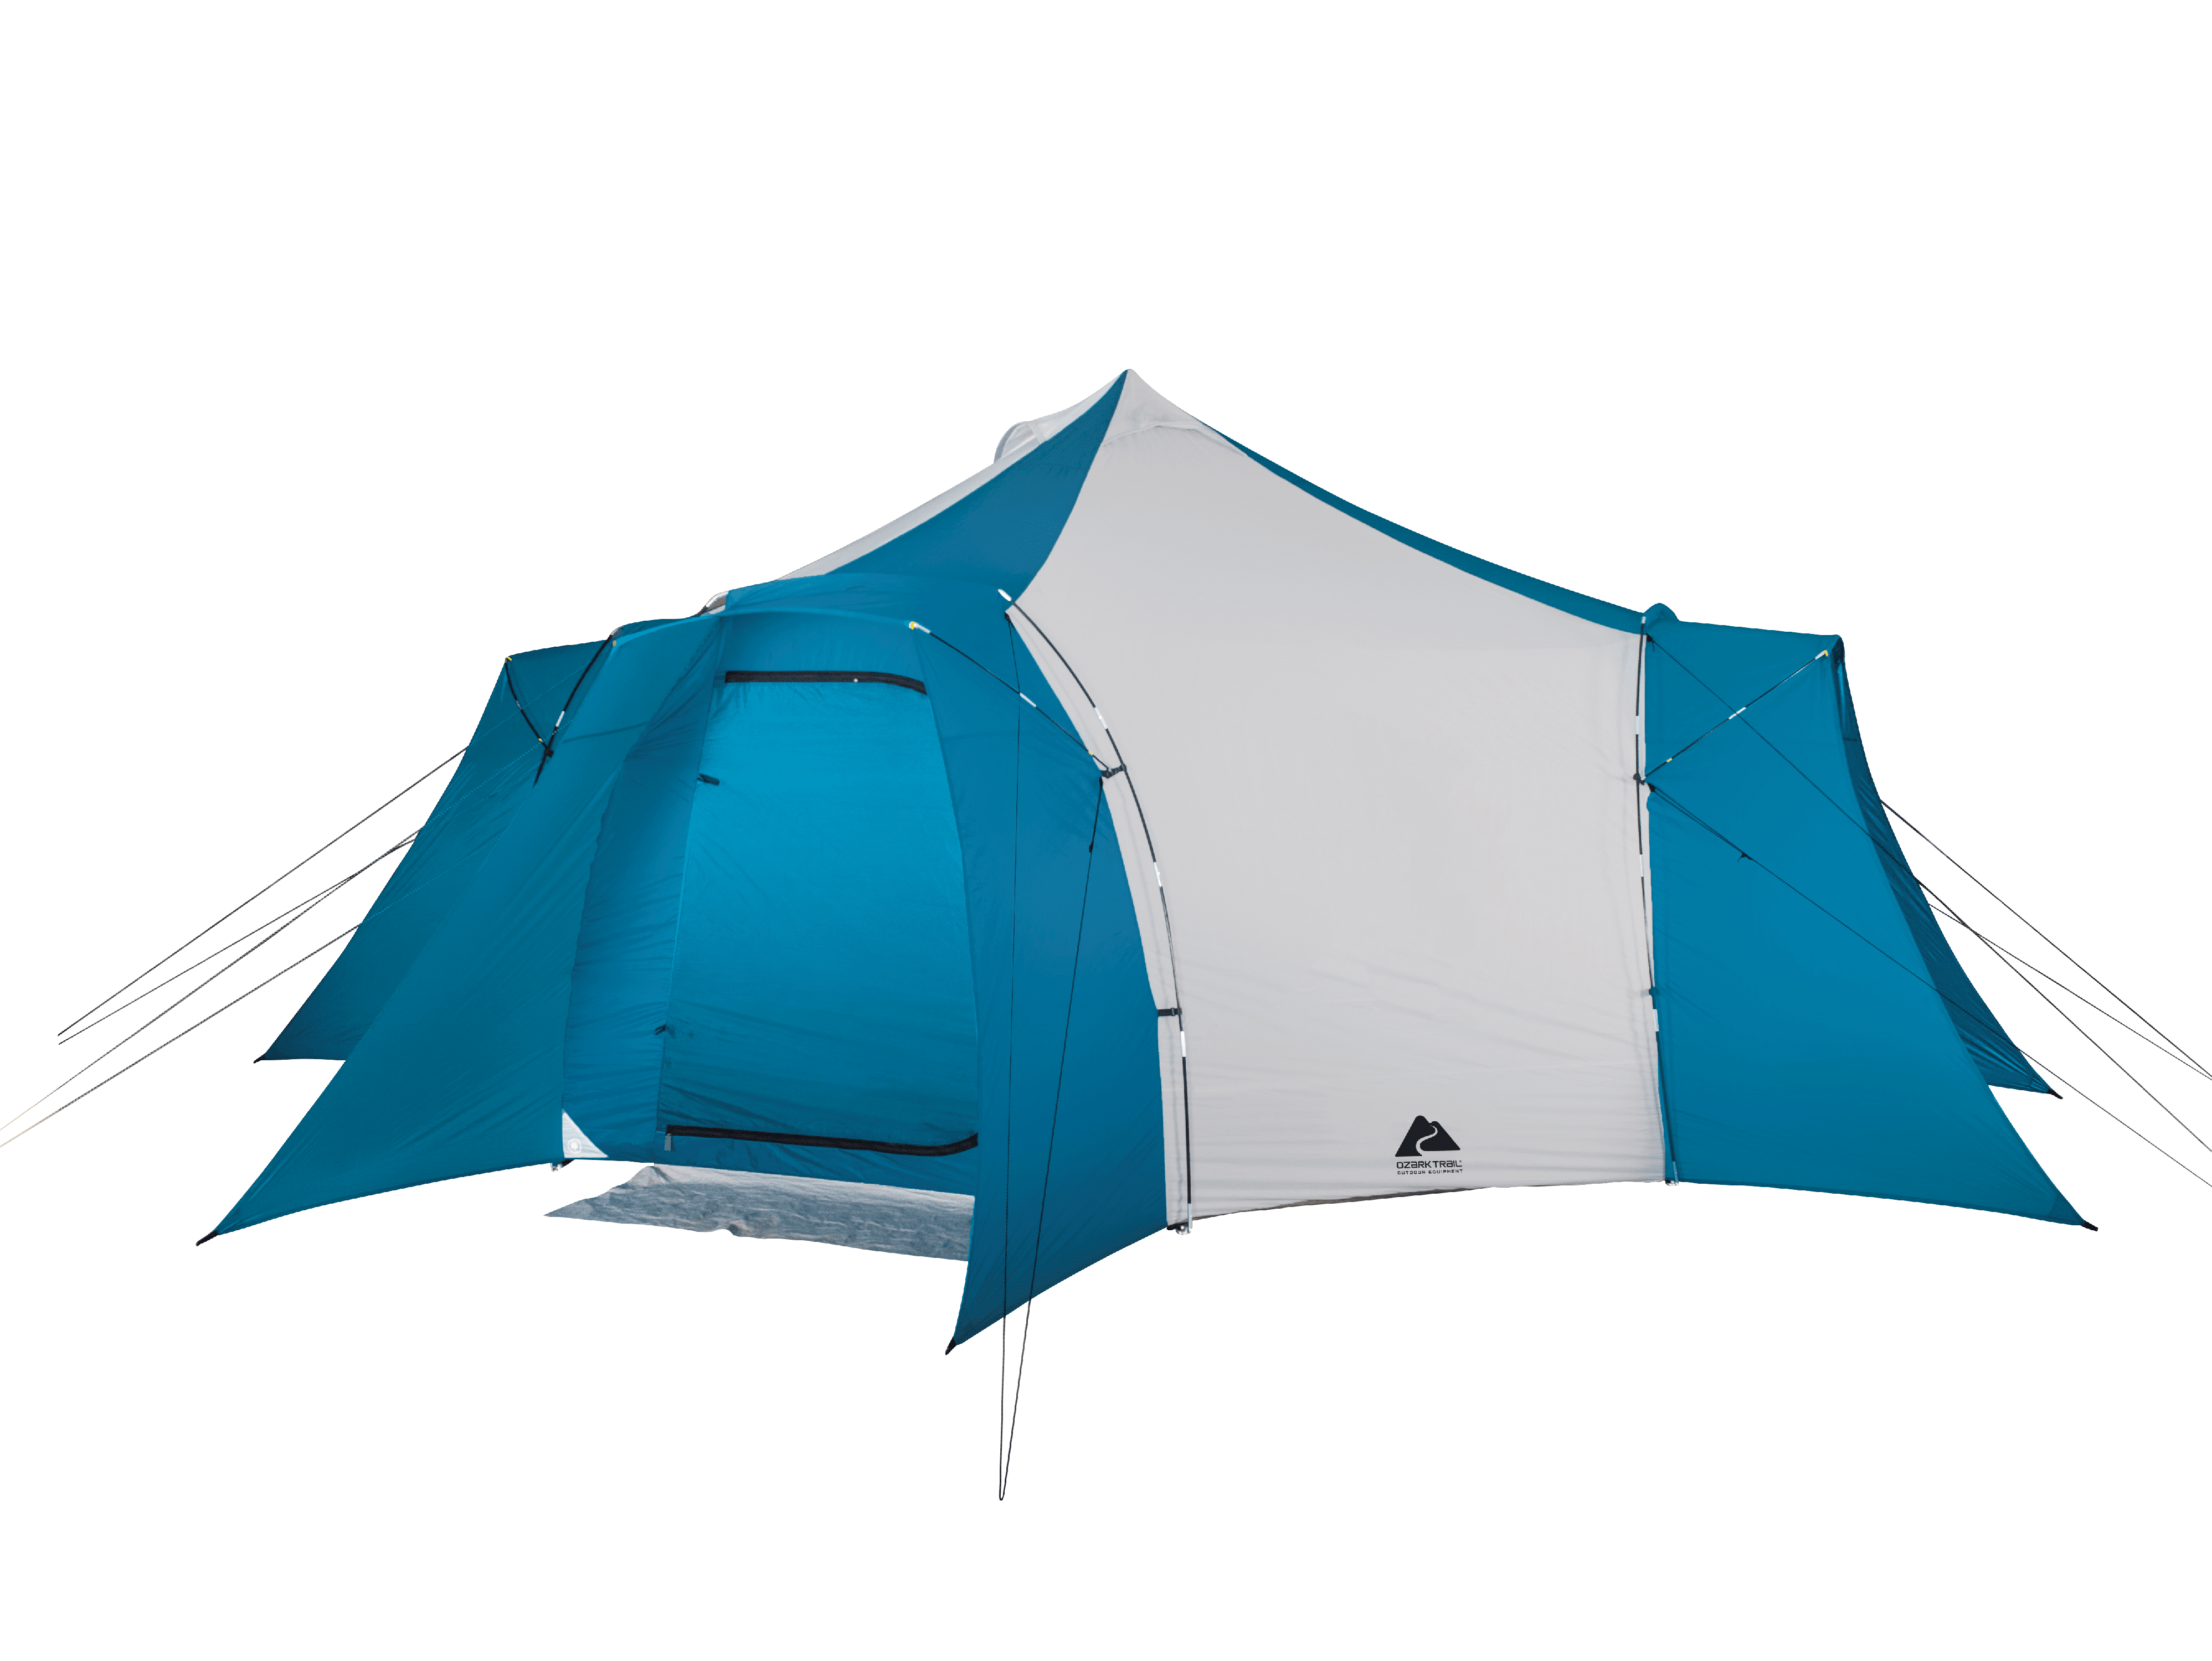 12-Person Ozark Trail Ultimate Festival Tent (15'x15') $125 + Free Shipping